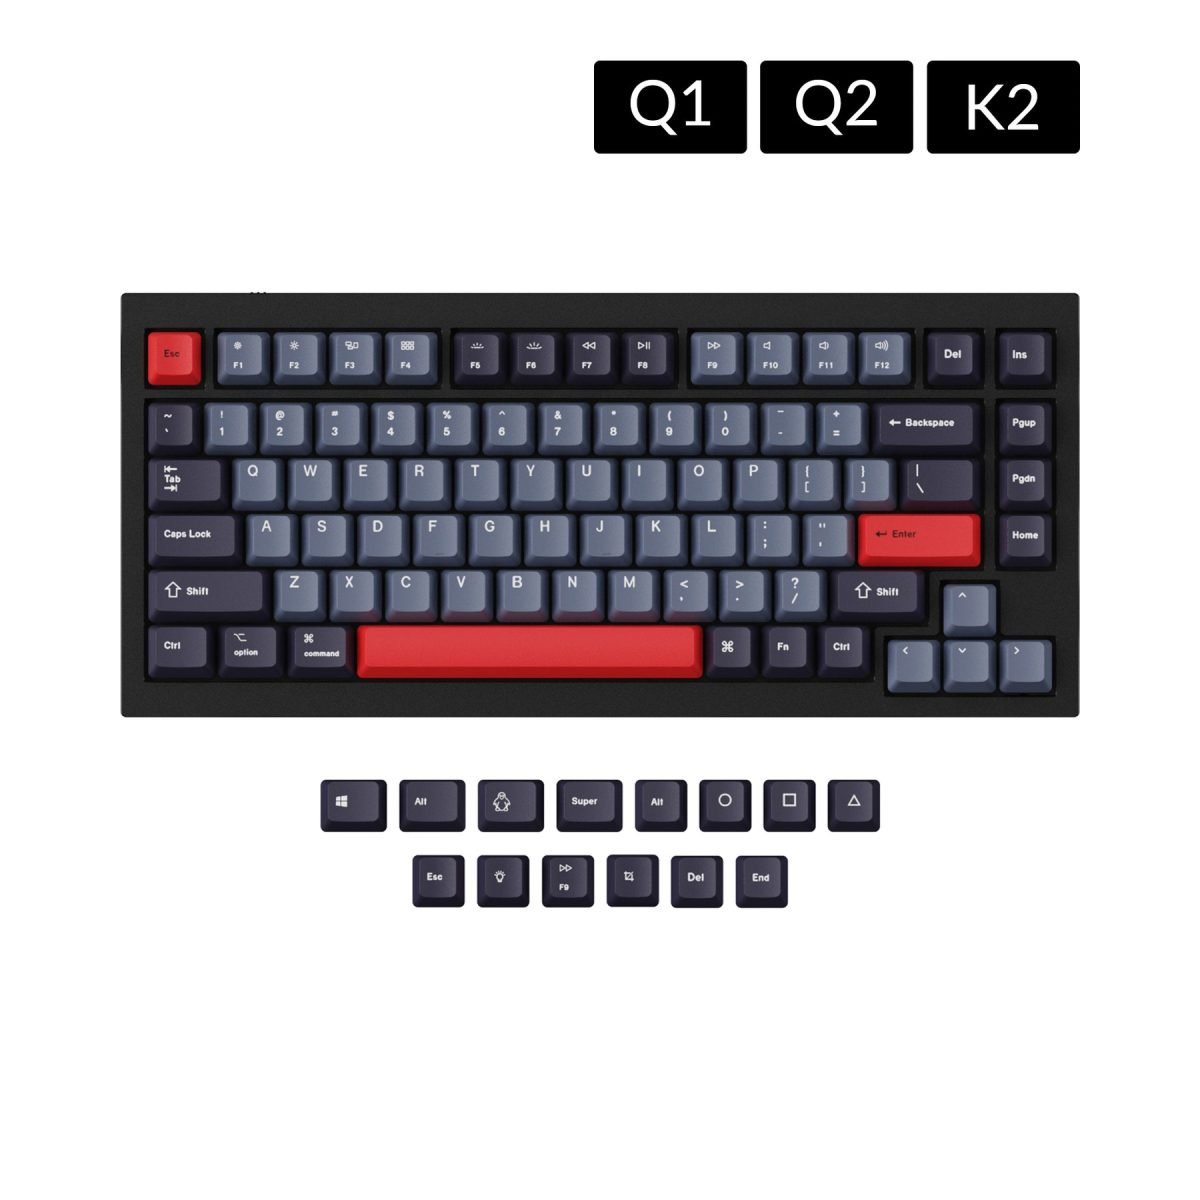 keychron oem dye sub pbt keycap set for q1 q2 k2 dolch